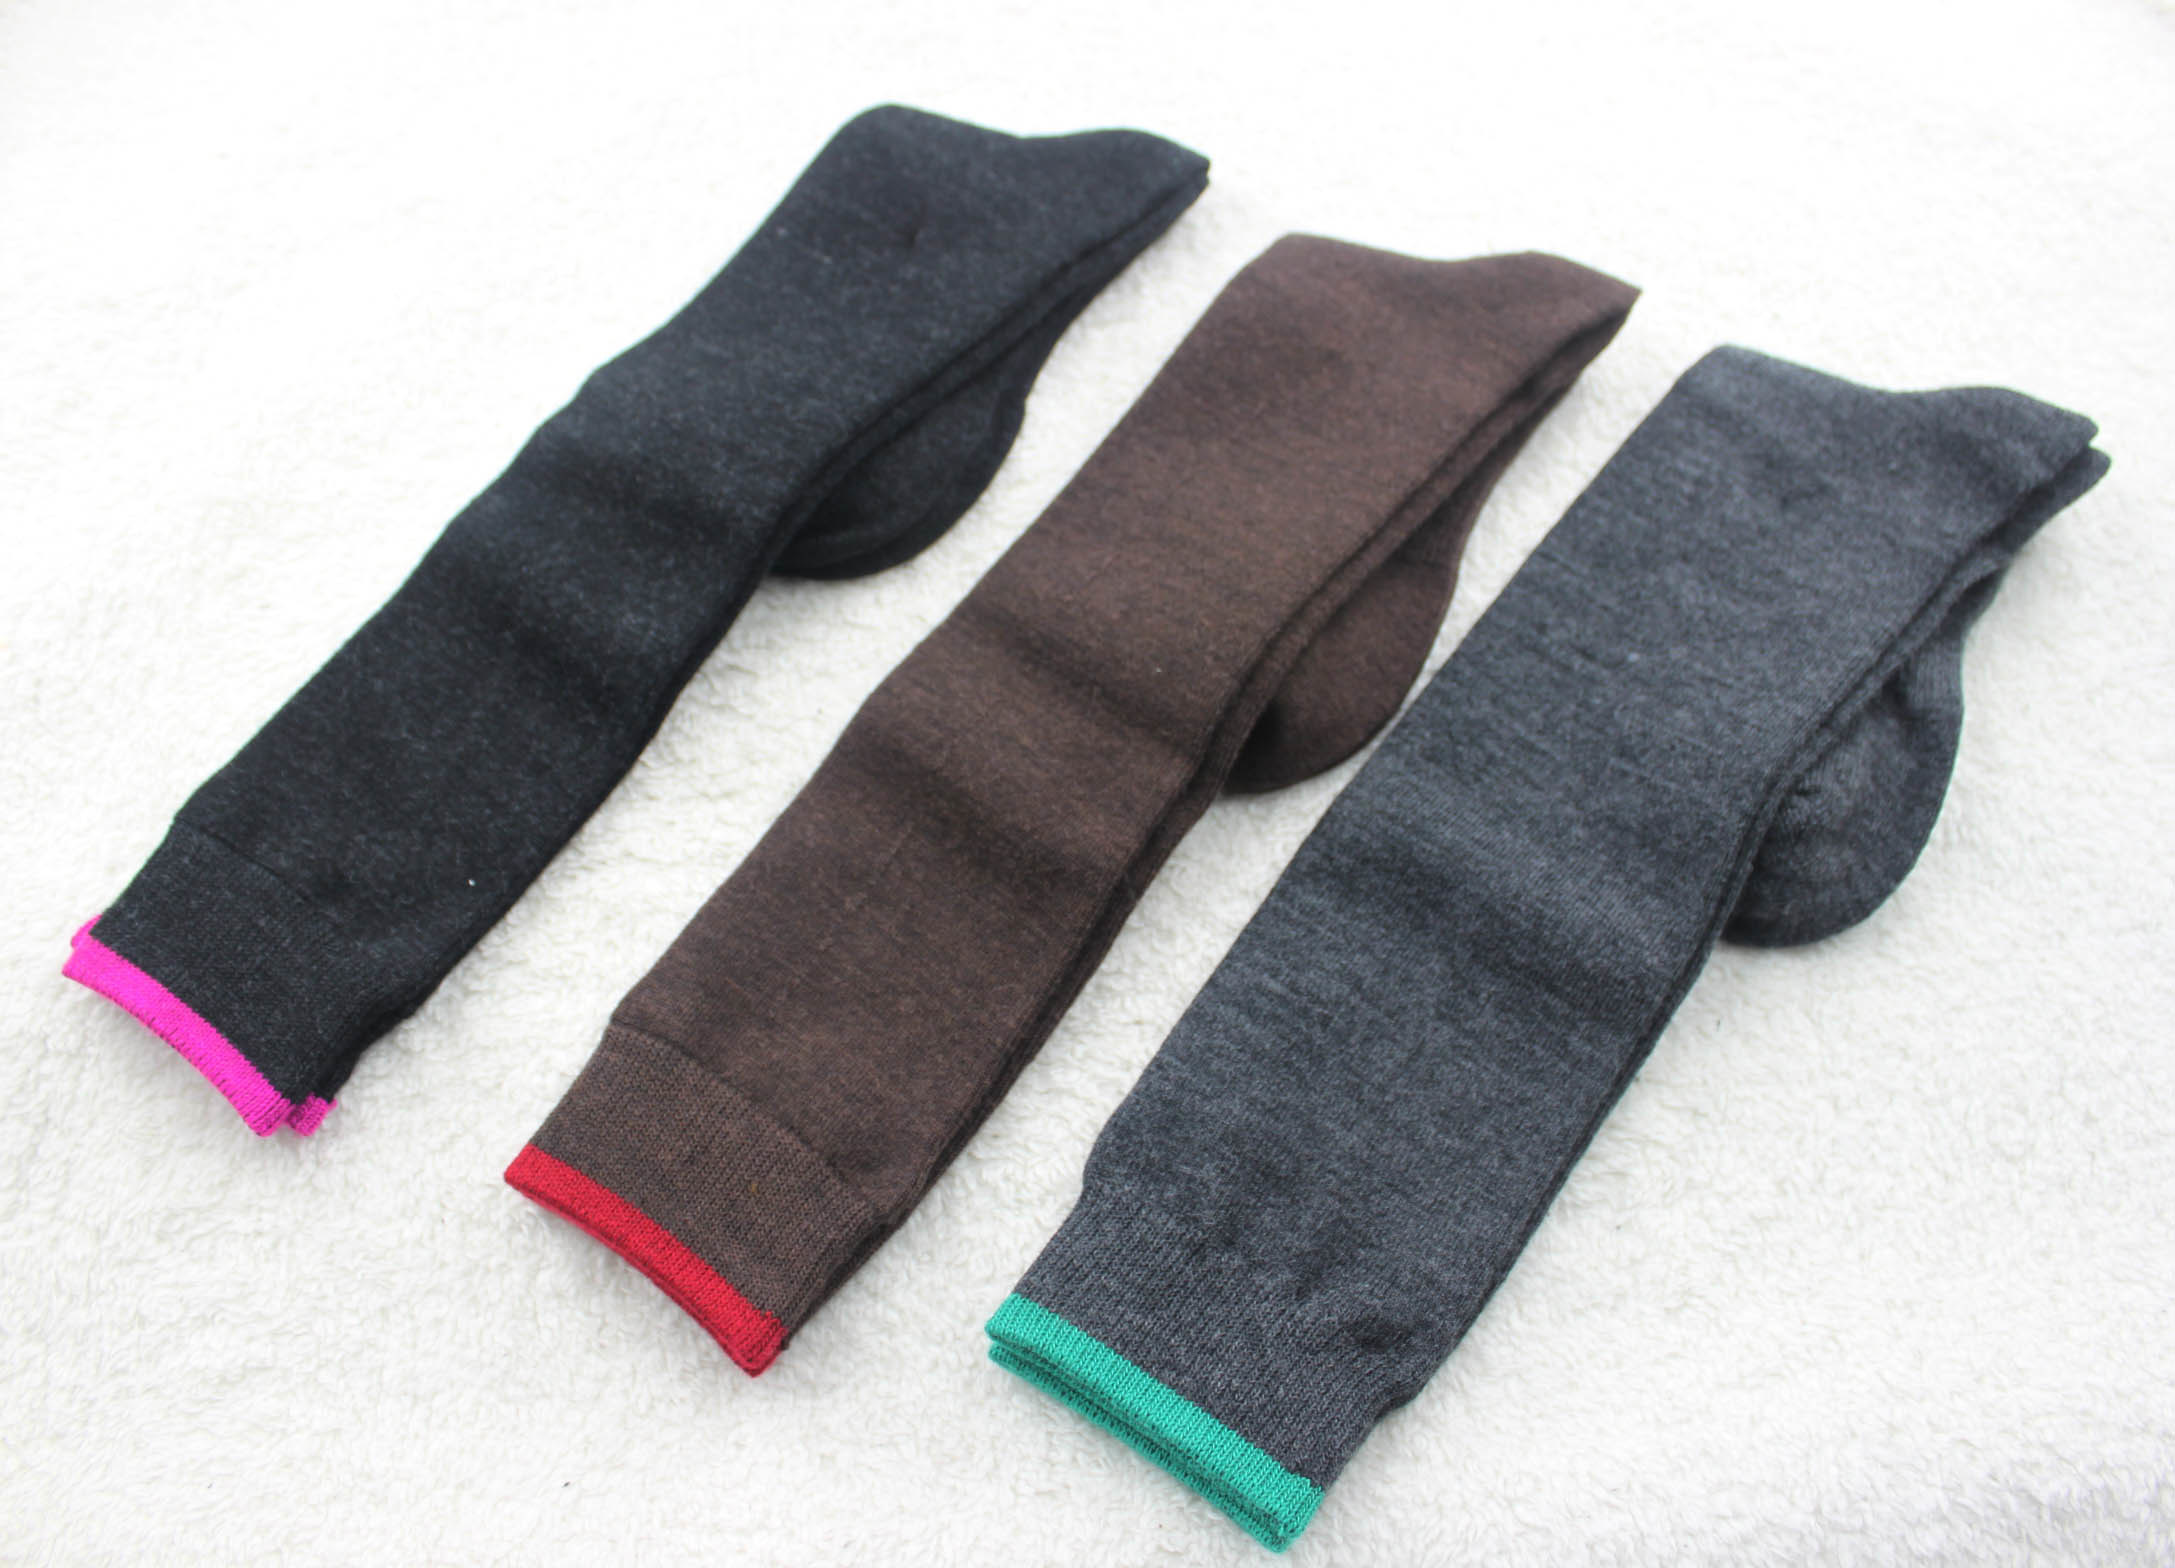 Merino Wool Knee High Socks